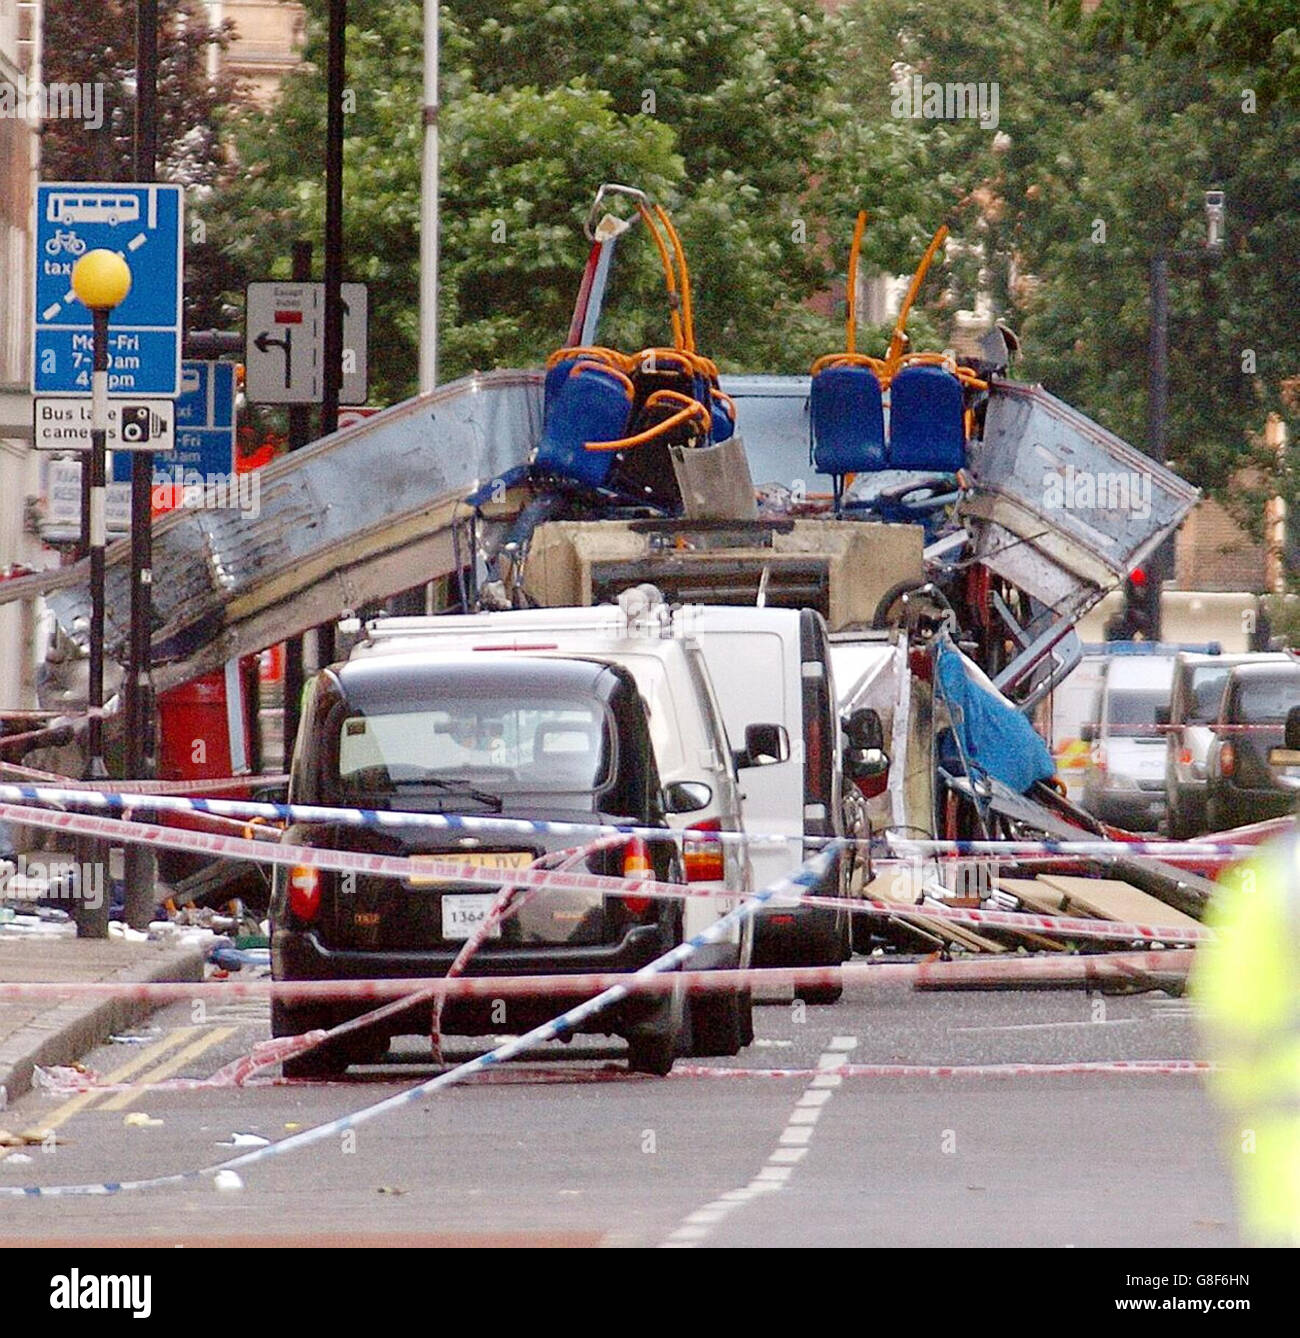 London Terrorist Attacks. The scene in Tavistock Square, after a bomb ripped through a double decker bus. Stock Photo